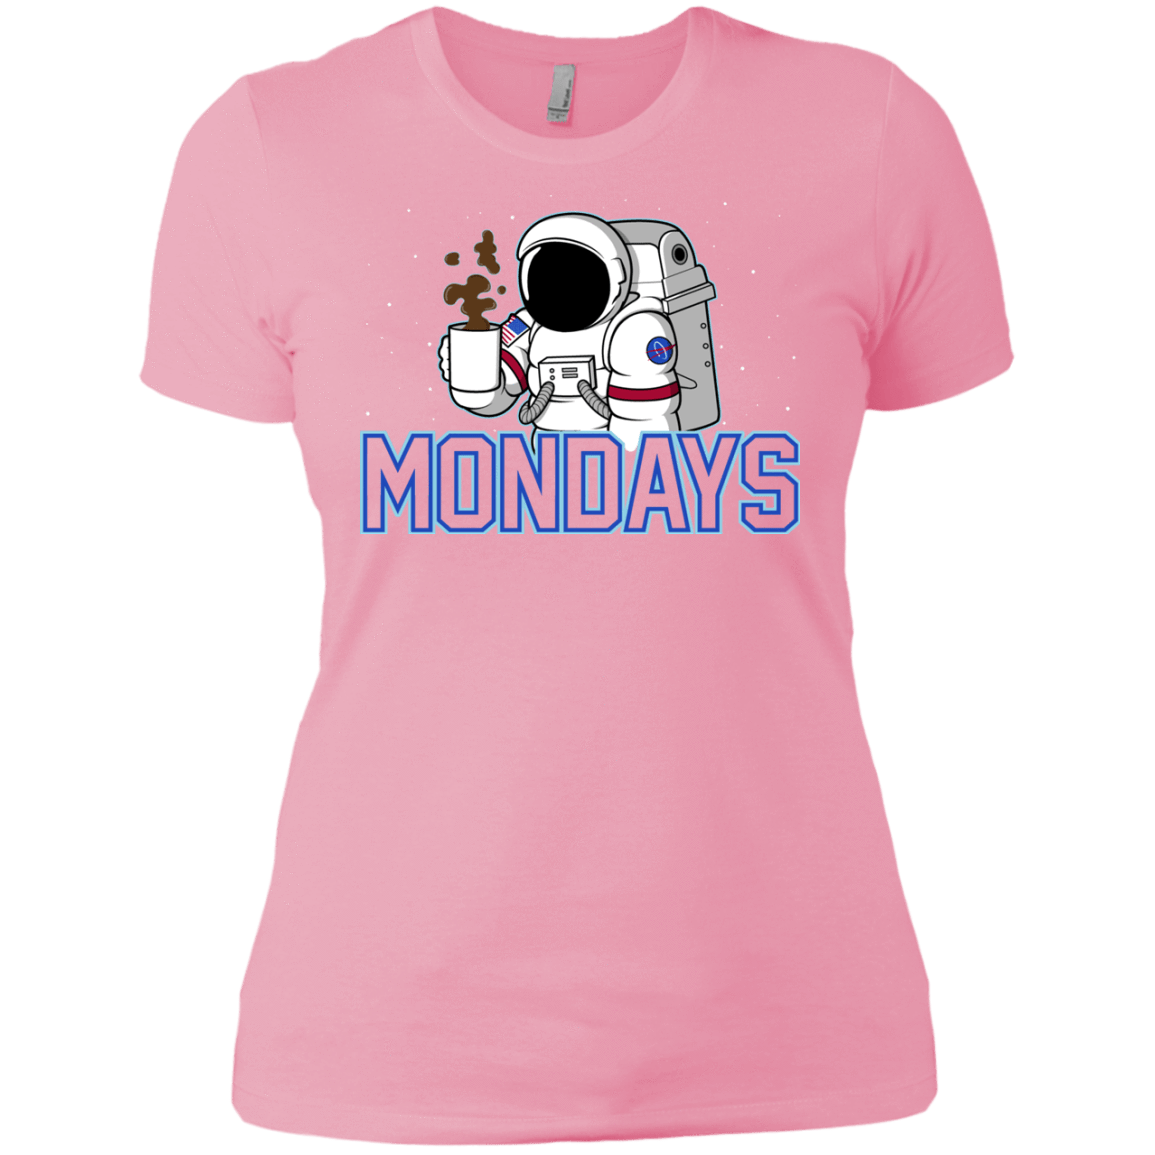 T-Shirts Light Pink / X-Small Space Mondays Women's Premium T-Shirt